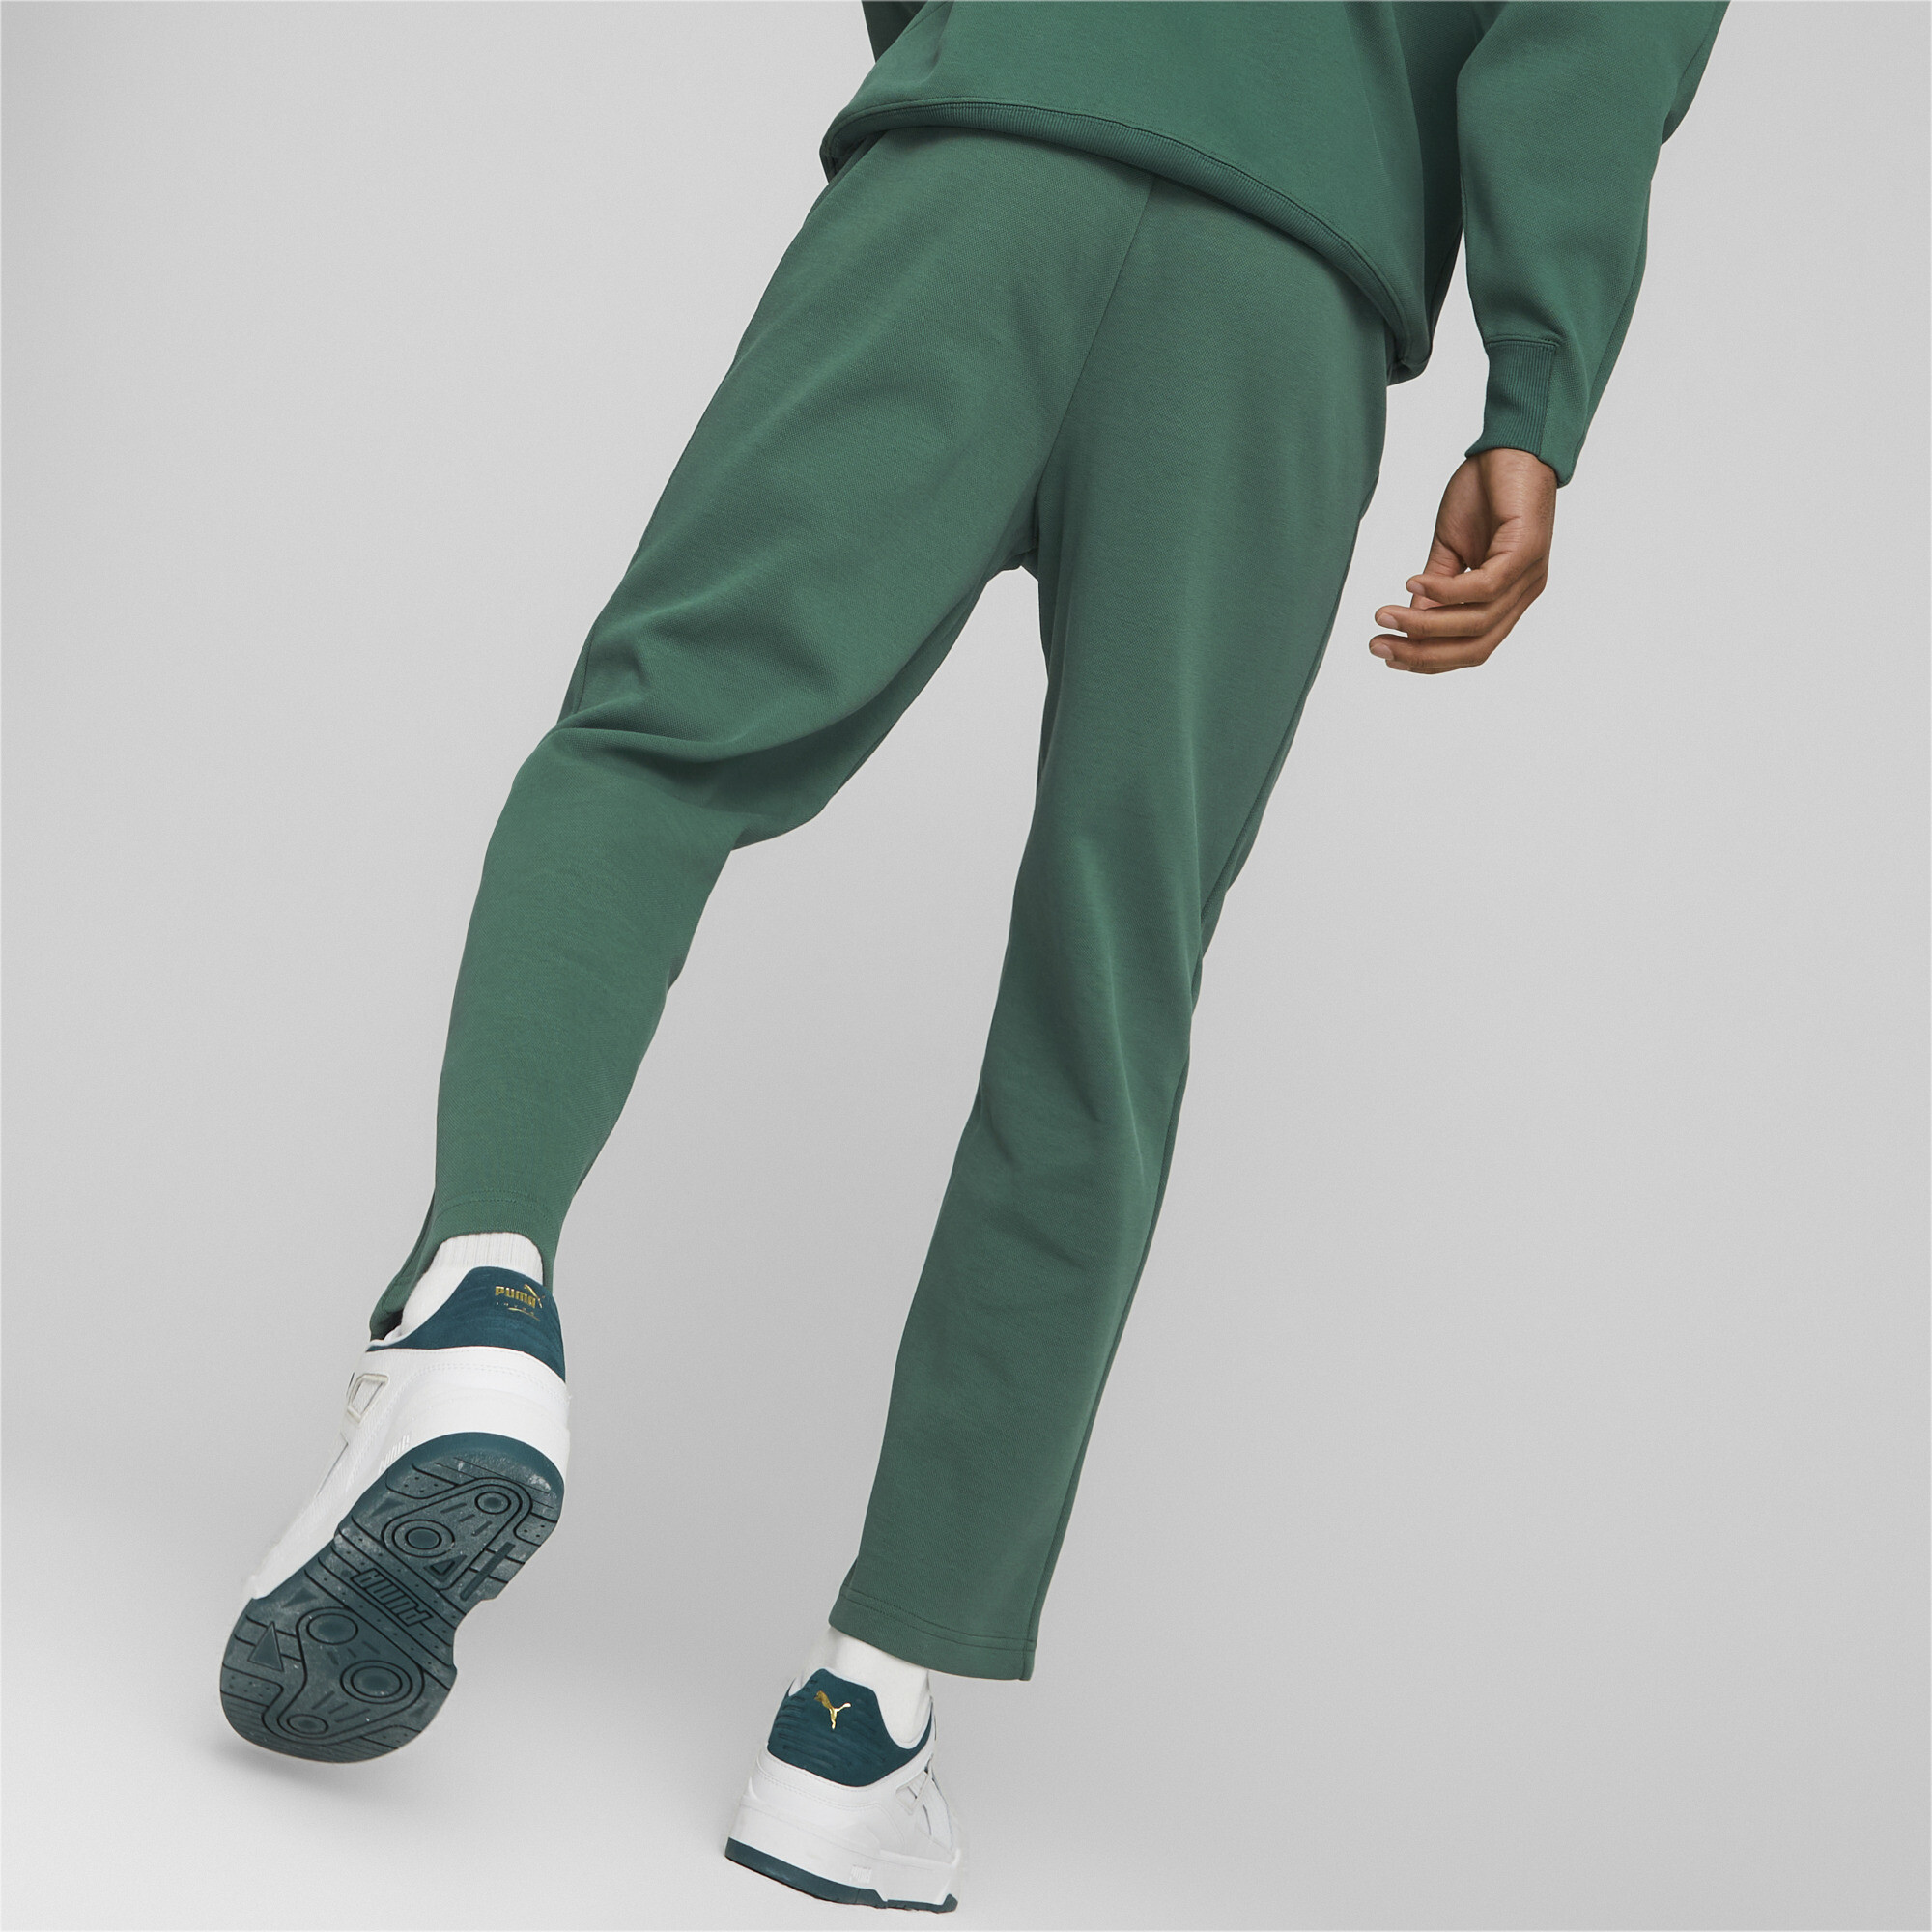 Men's PUMA T7 Track Pants Men In 40 - Green, Size XS